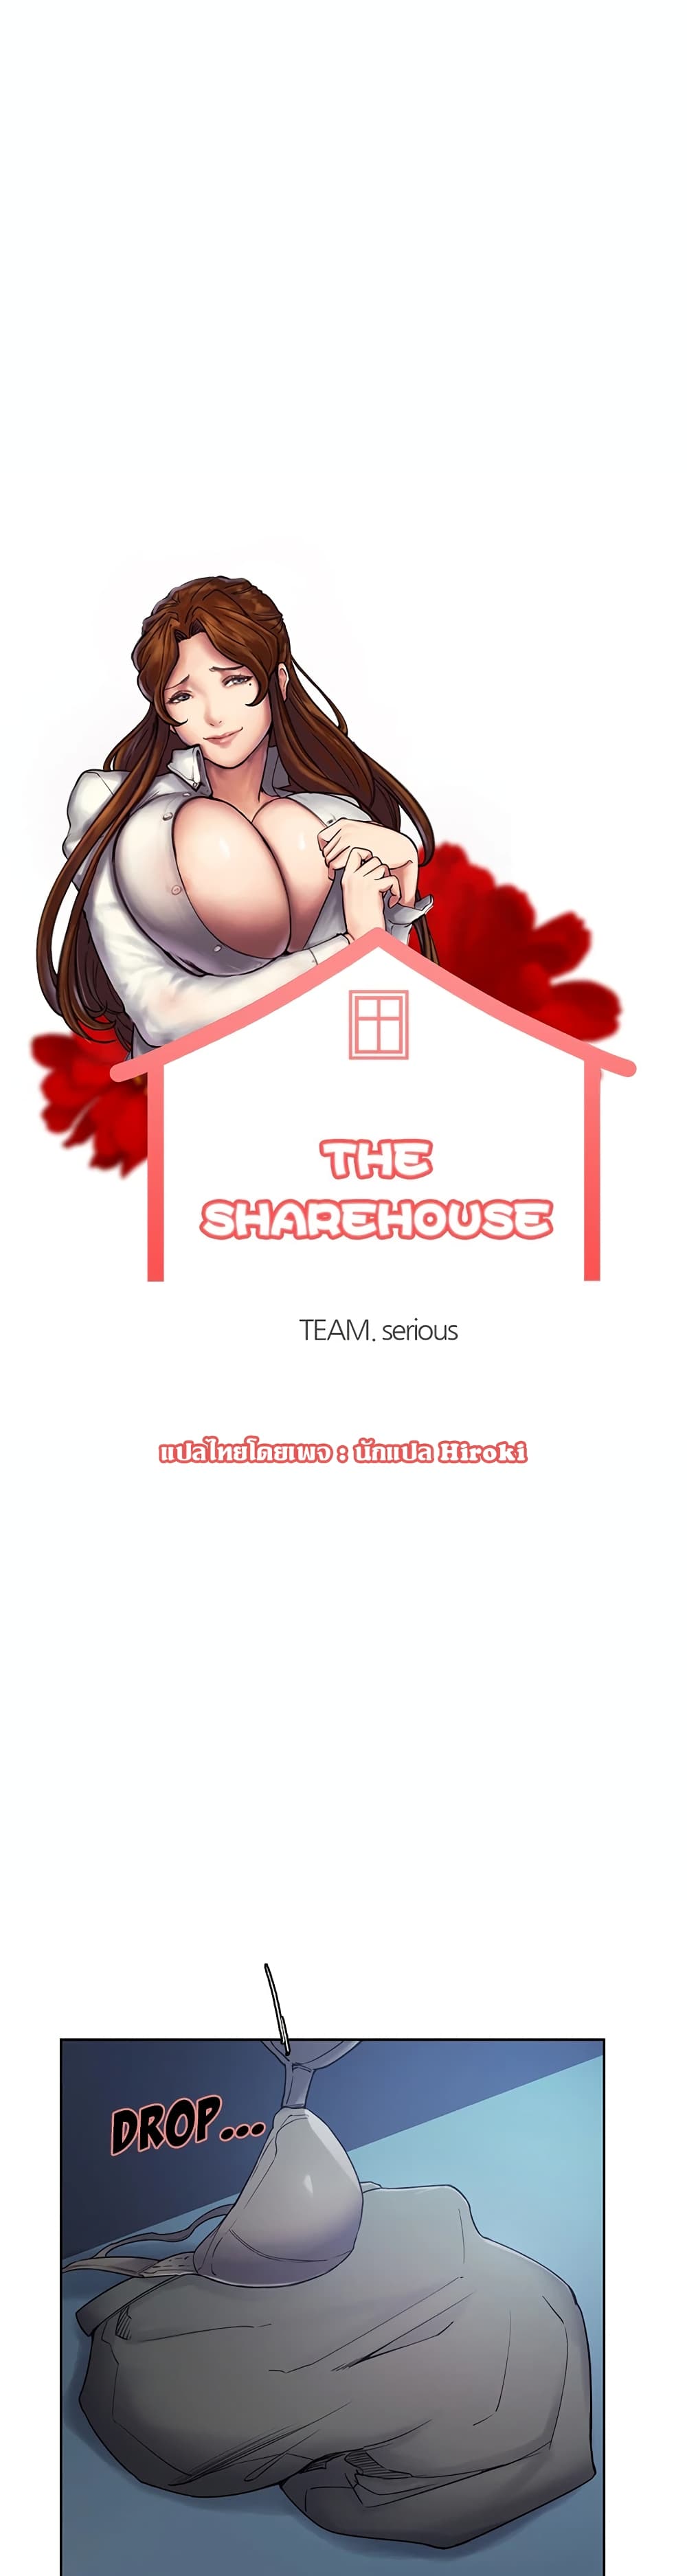 The Sharehouse 43 01